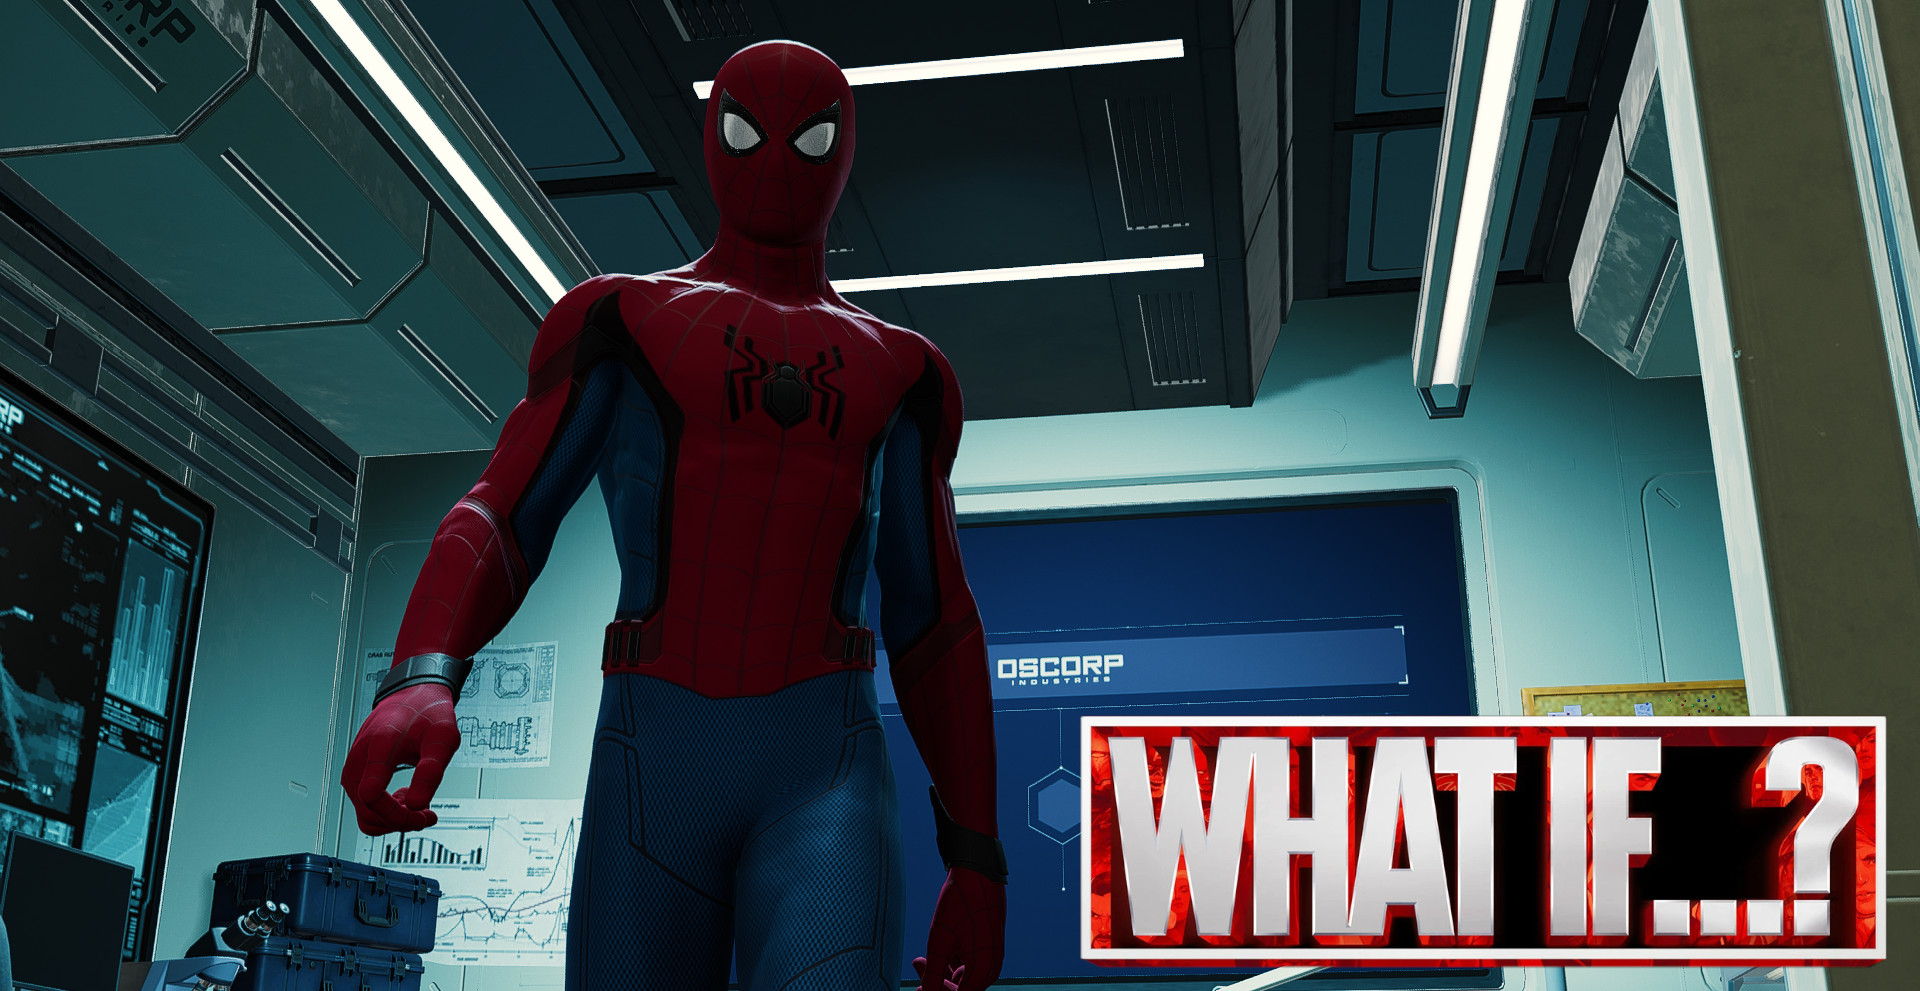 Marvel's Spider-Man on PC Needs One Mod ASAP